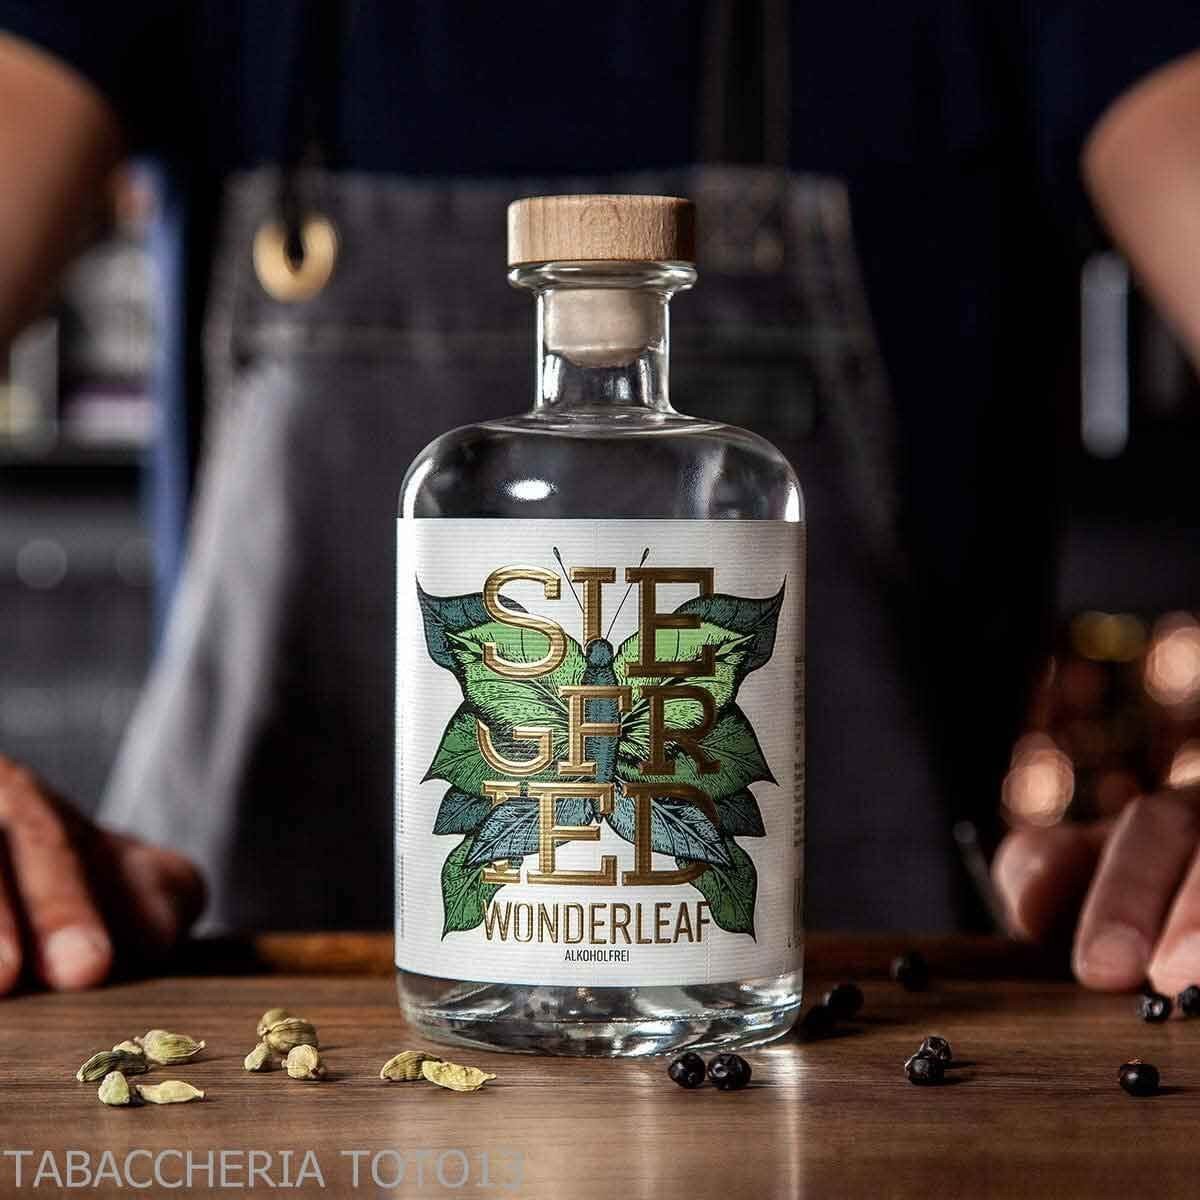 Siegfried Wonderleaf, zero gin, | drink Non-alcoholic alcohol! scented